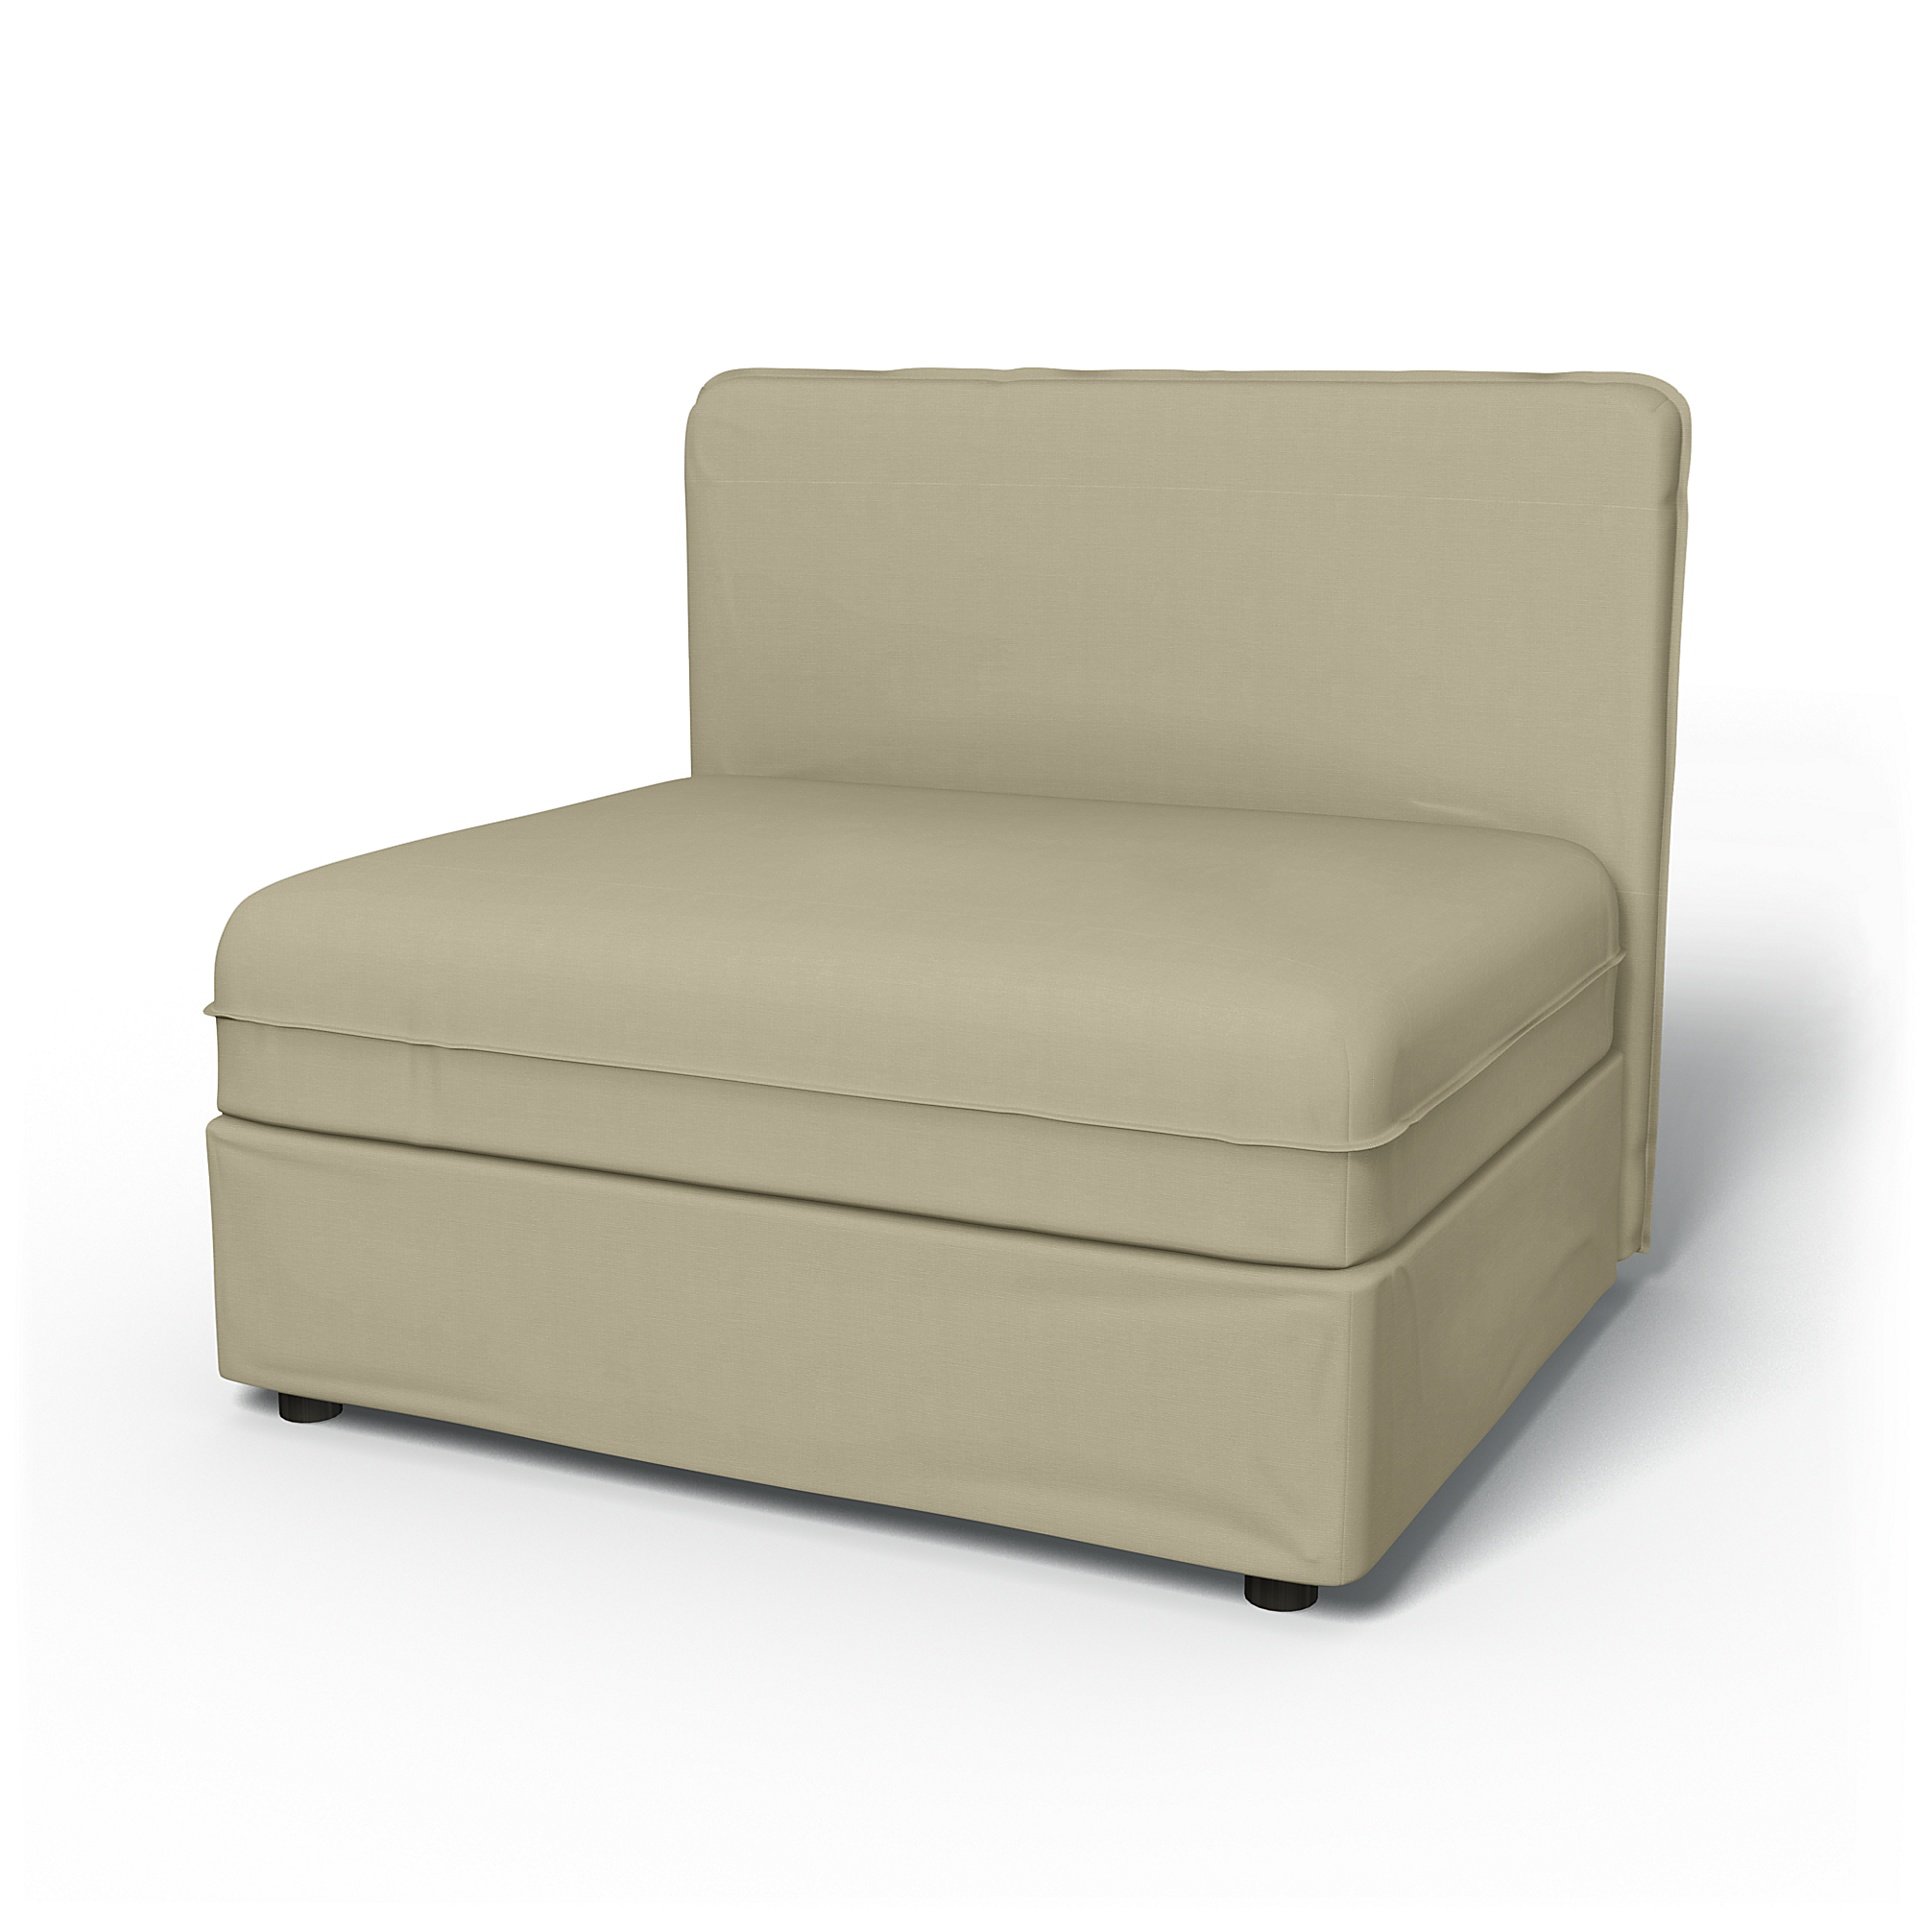 IKEA - Vallentuna Seat Module with Low Back Cover 100x80cm 39x32in, Sand Beige, Cotton - Bemz